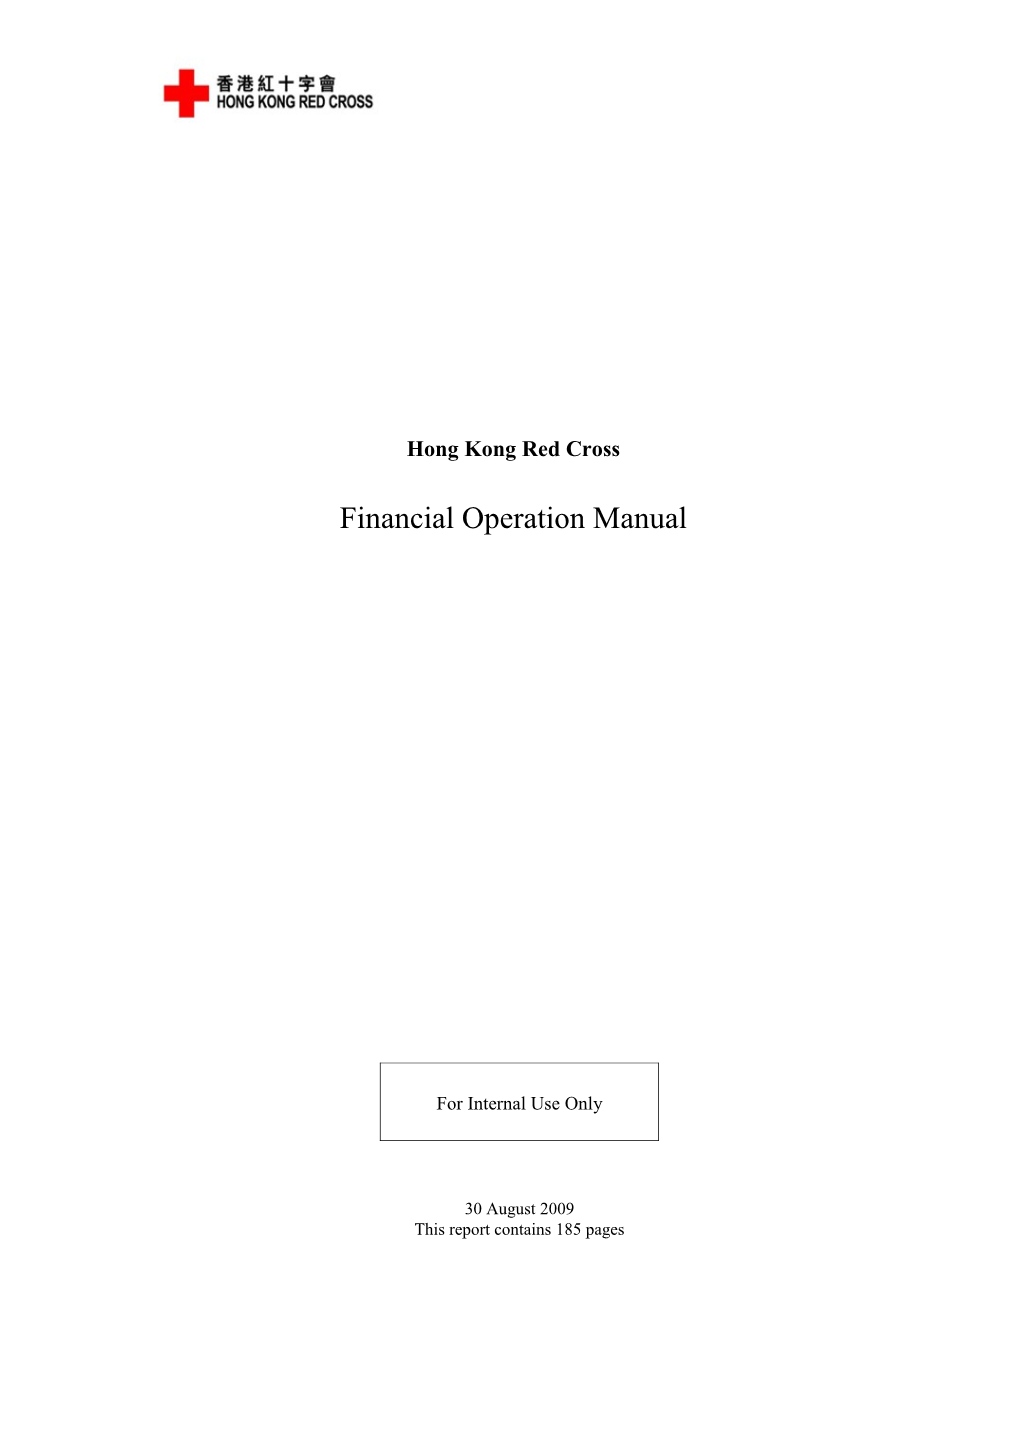 Financial Operation Manual